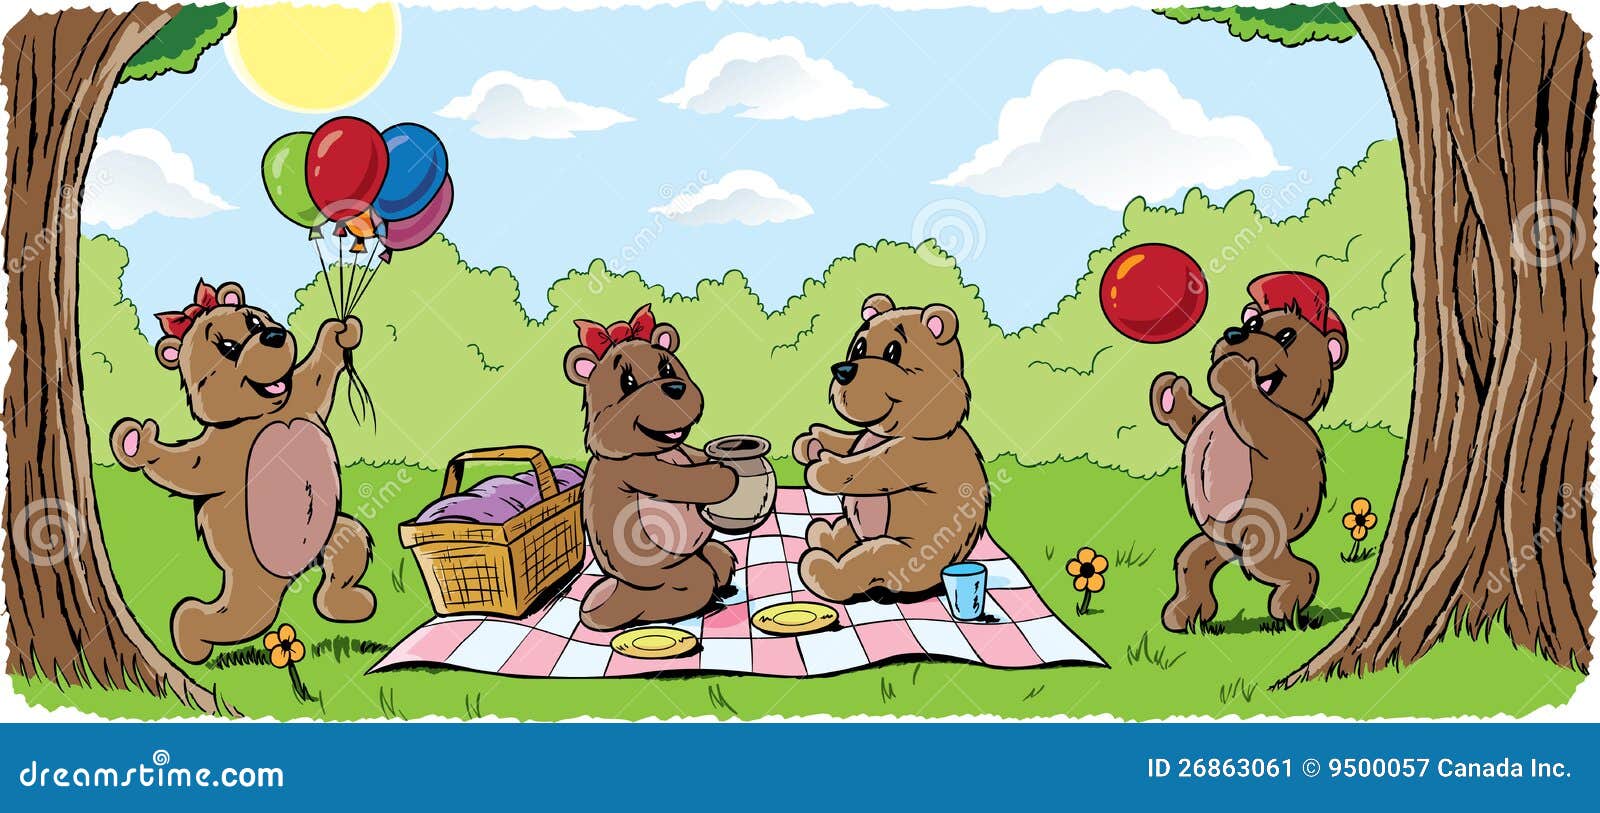 free teddy bear picnic clipart - photo #43